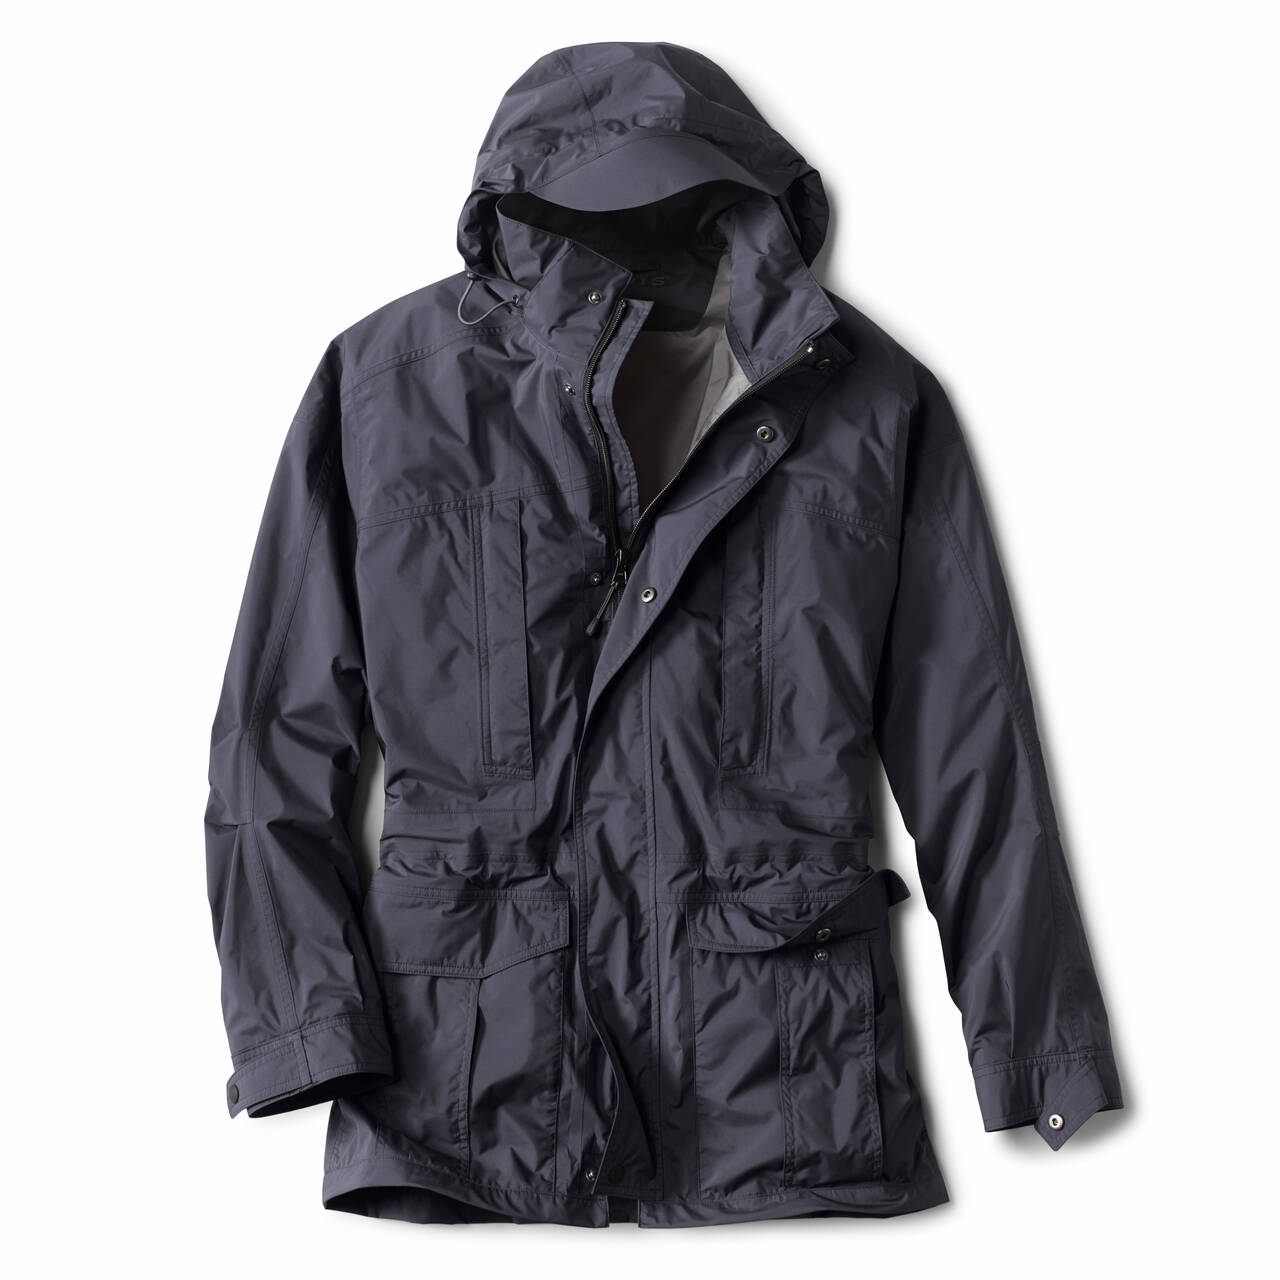 Orvis Pursell Waterproof Jacket - Khaki ☆ The Sporting Shoppe ☆ Richmond,  Rhode Island